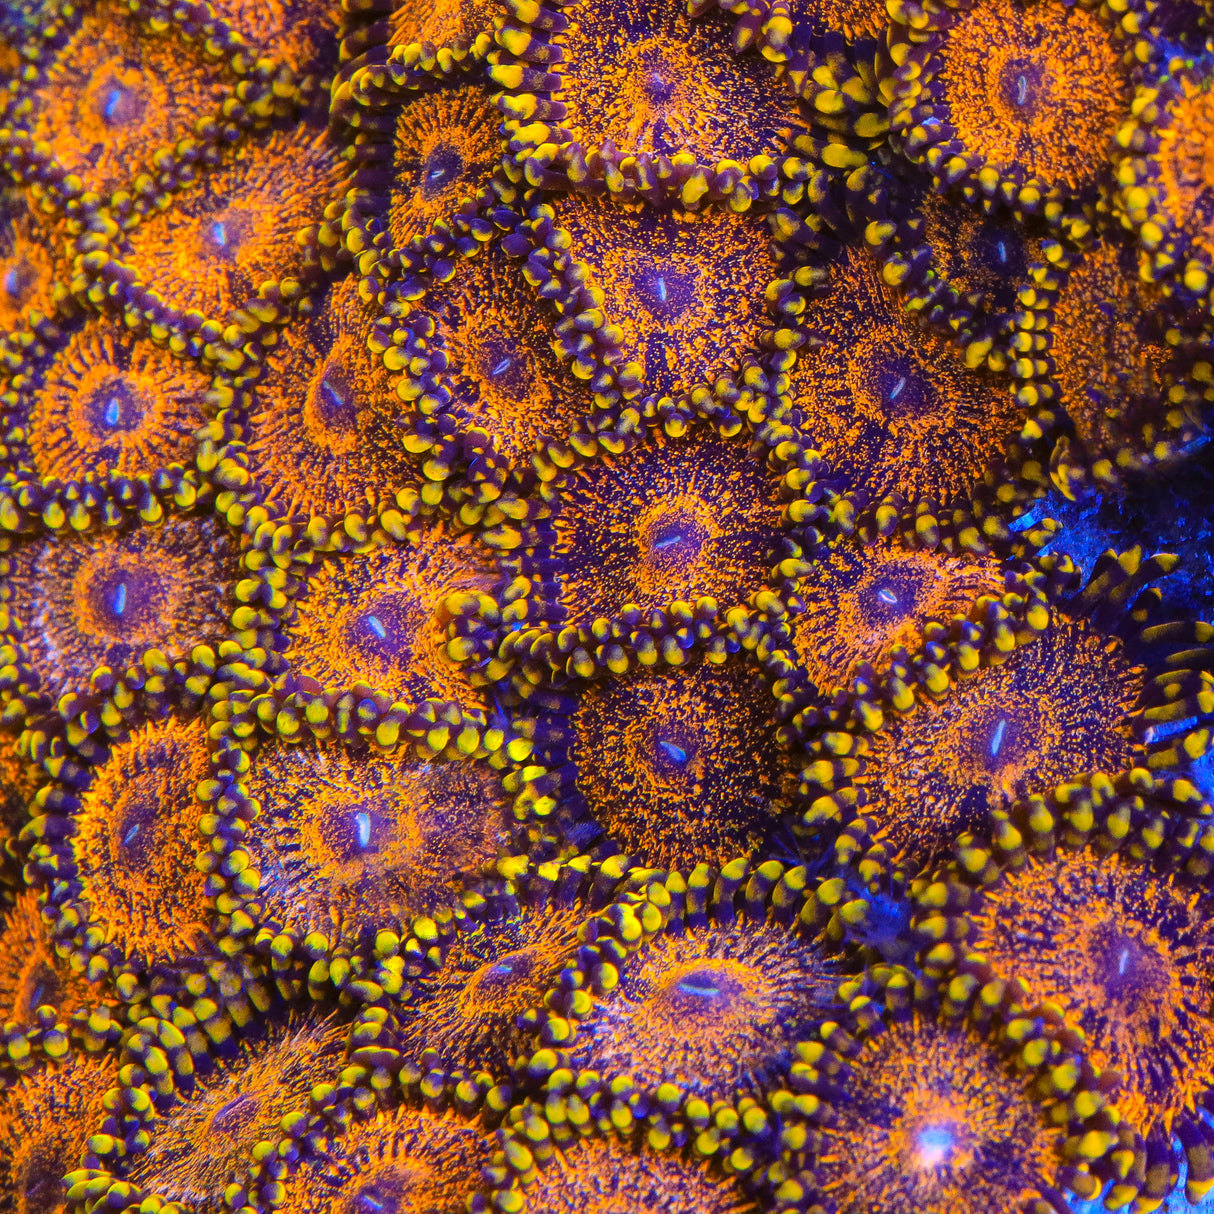 OG Soprano Zoanthid Coral - Top Shelf Aquatics